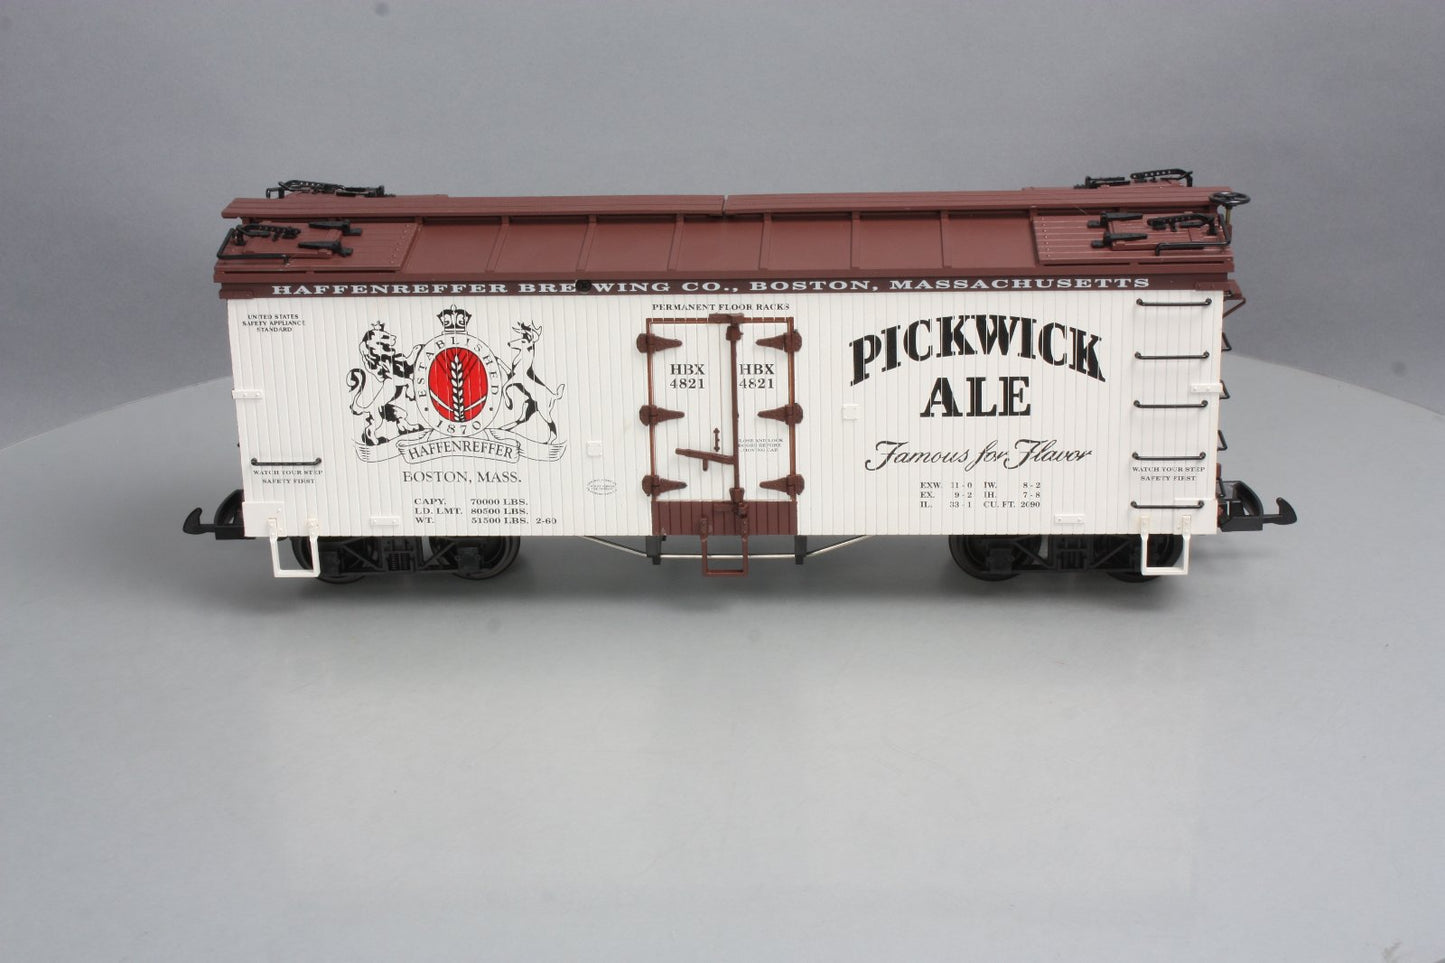 USA Trains 16412 G Scale Pickwick Ale Refrigerator Car